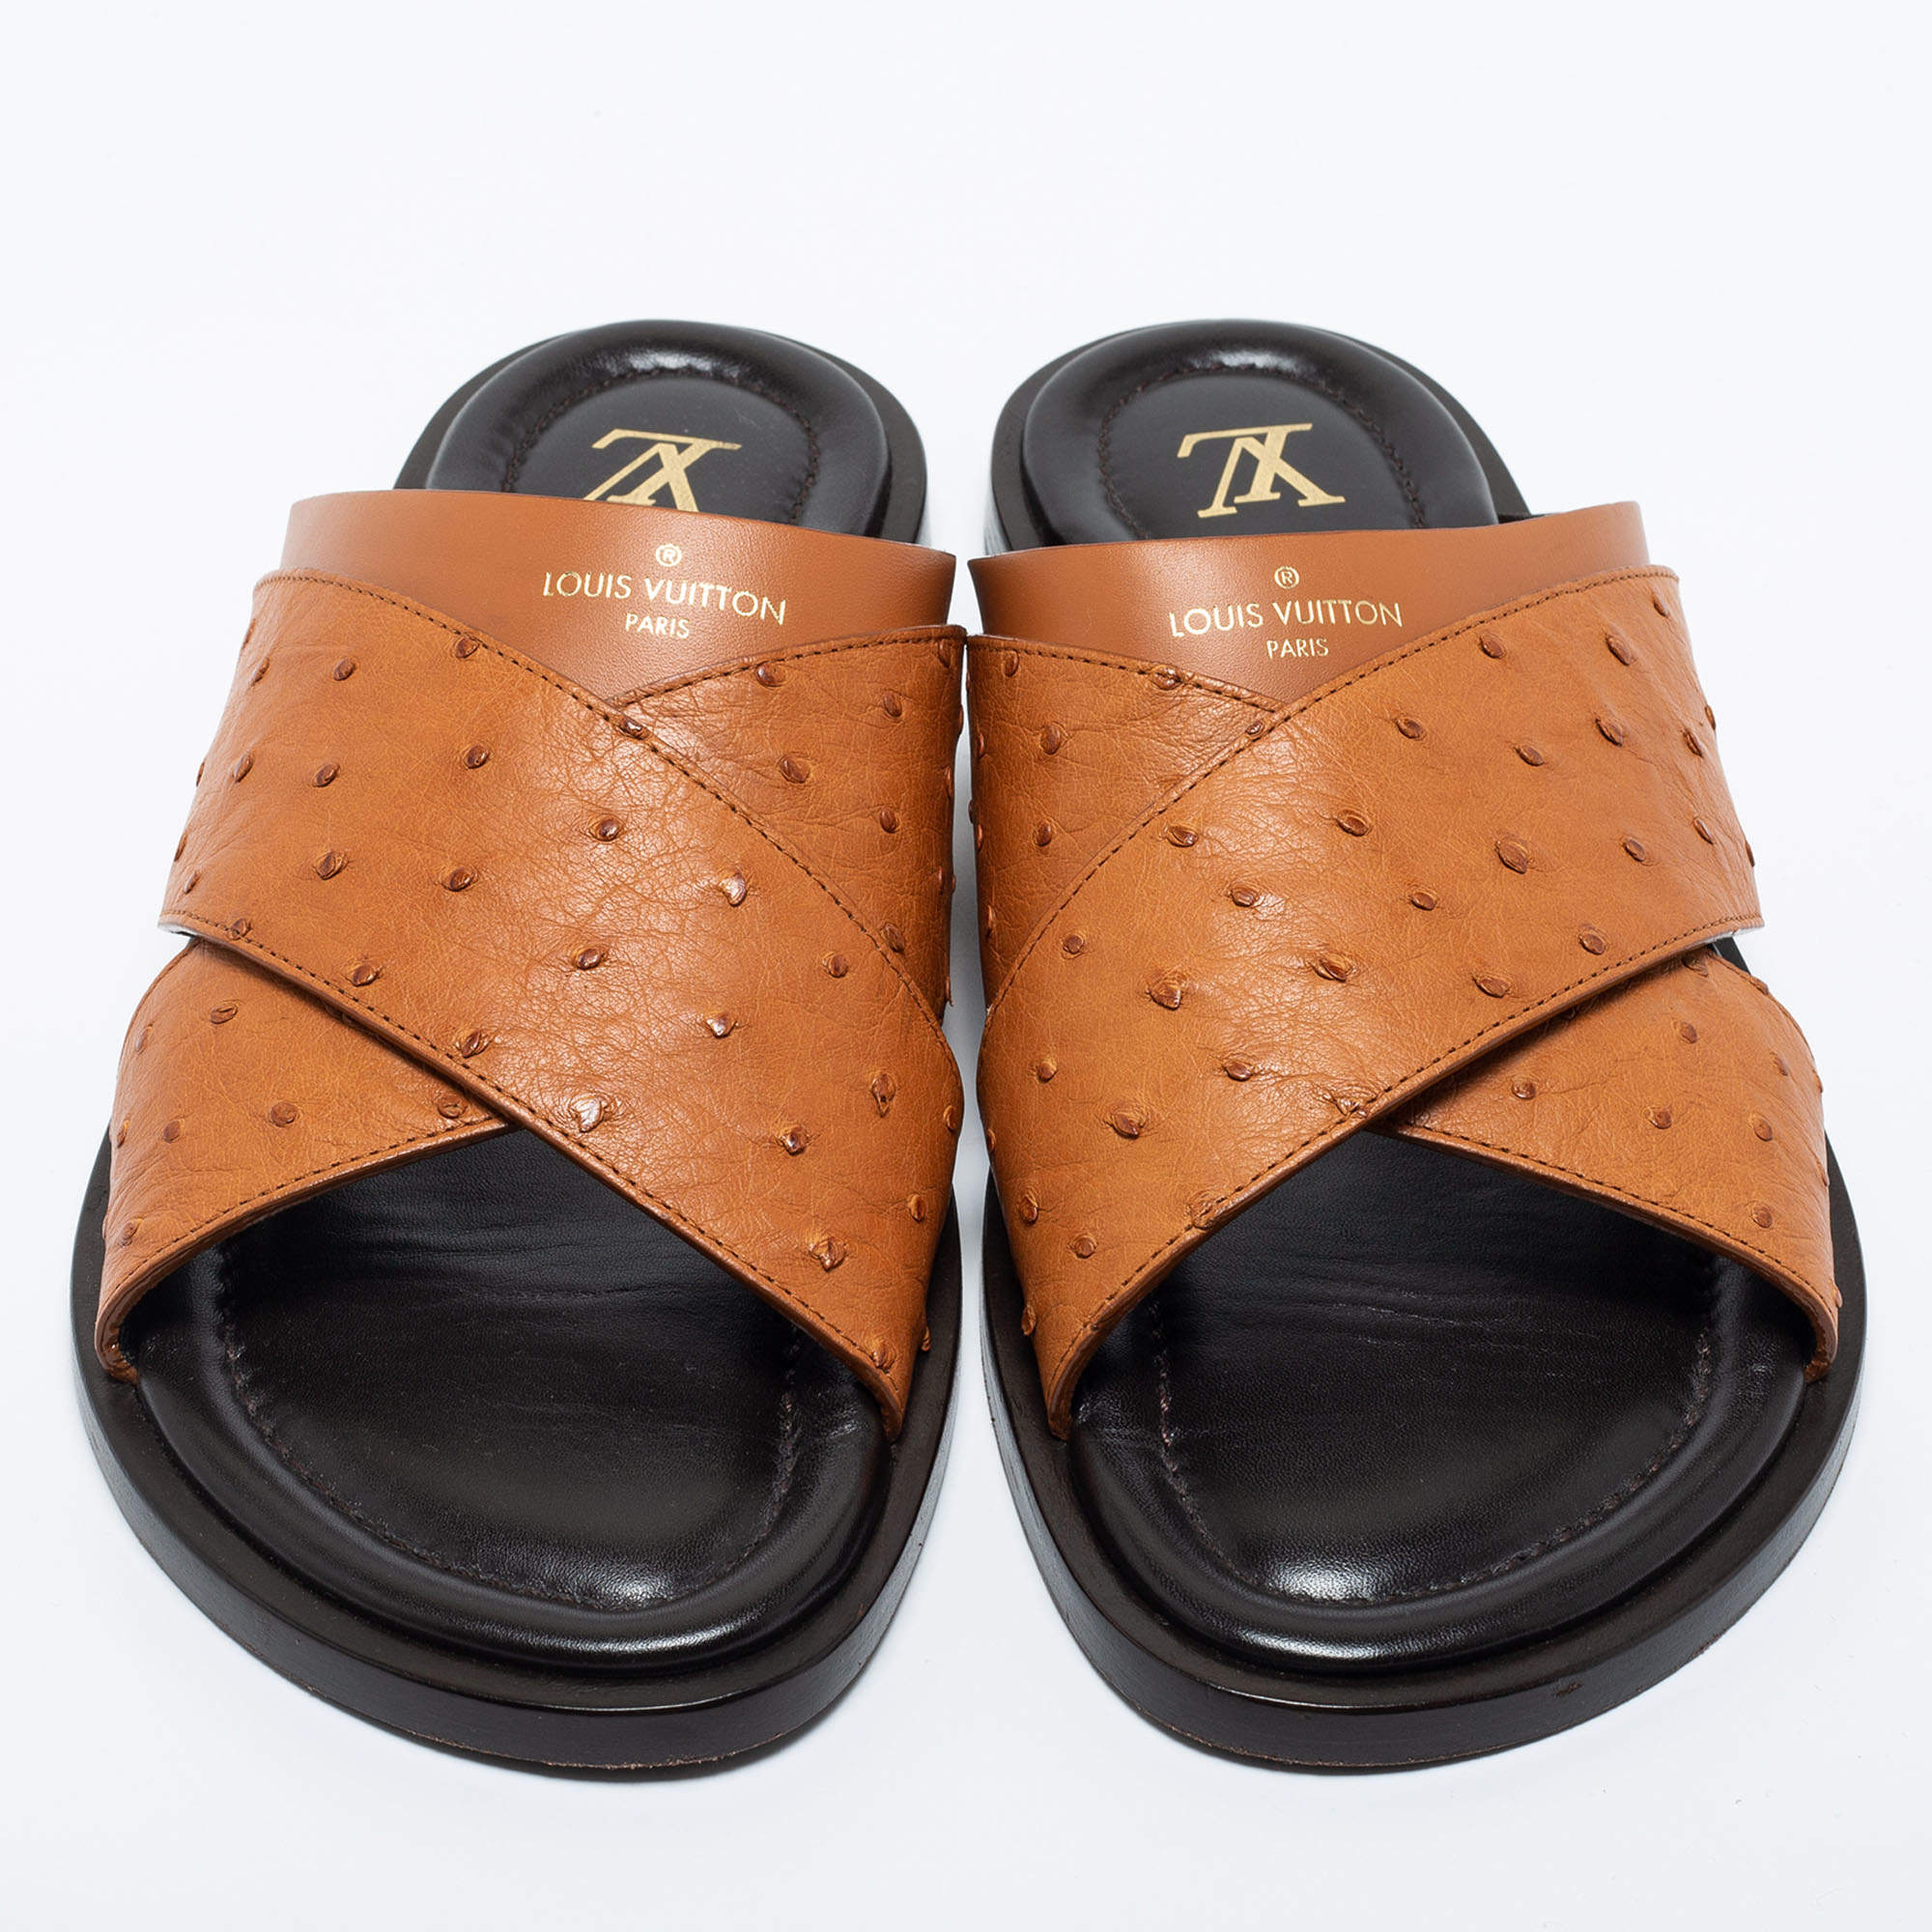 Louis Vuitton sandals brown replica  Louis vuitton sandals, Brown sandals,  Most expensive shoes